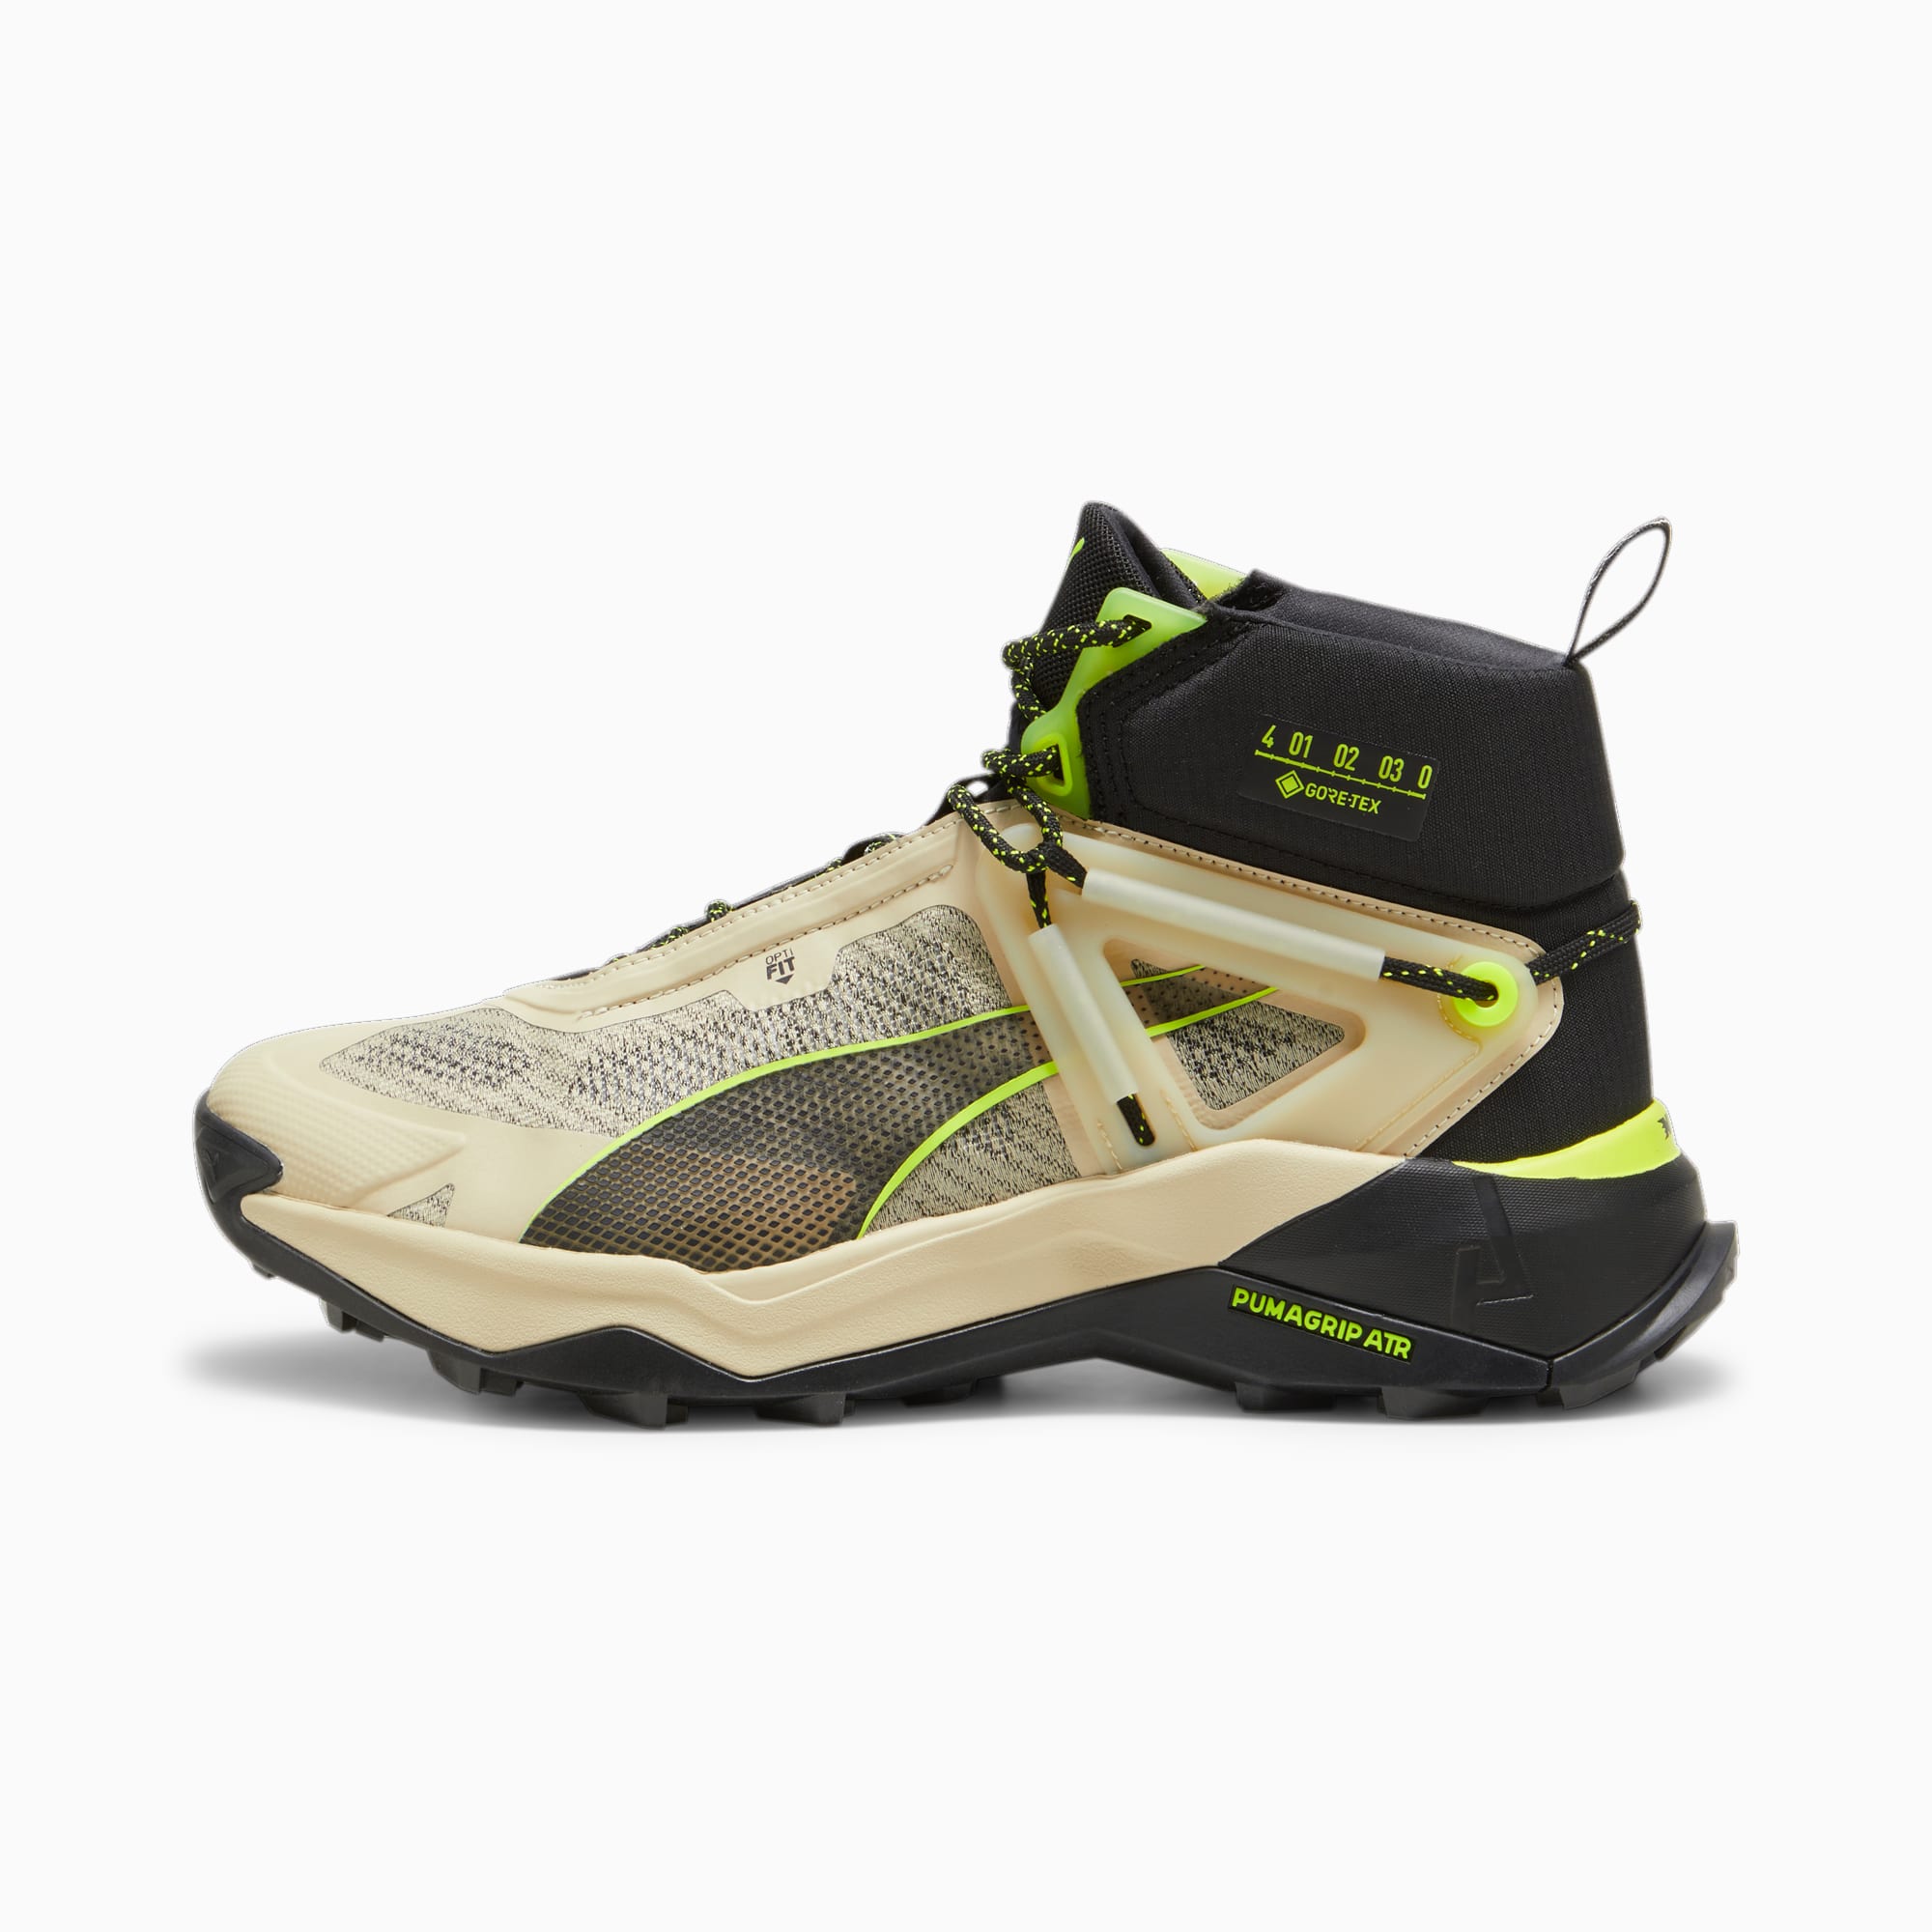 SEASONS Explore NITRO™ Mid GORE-TEX Men's Hiking Shoes